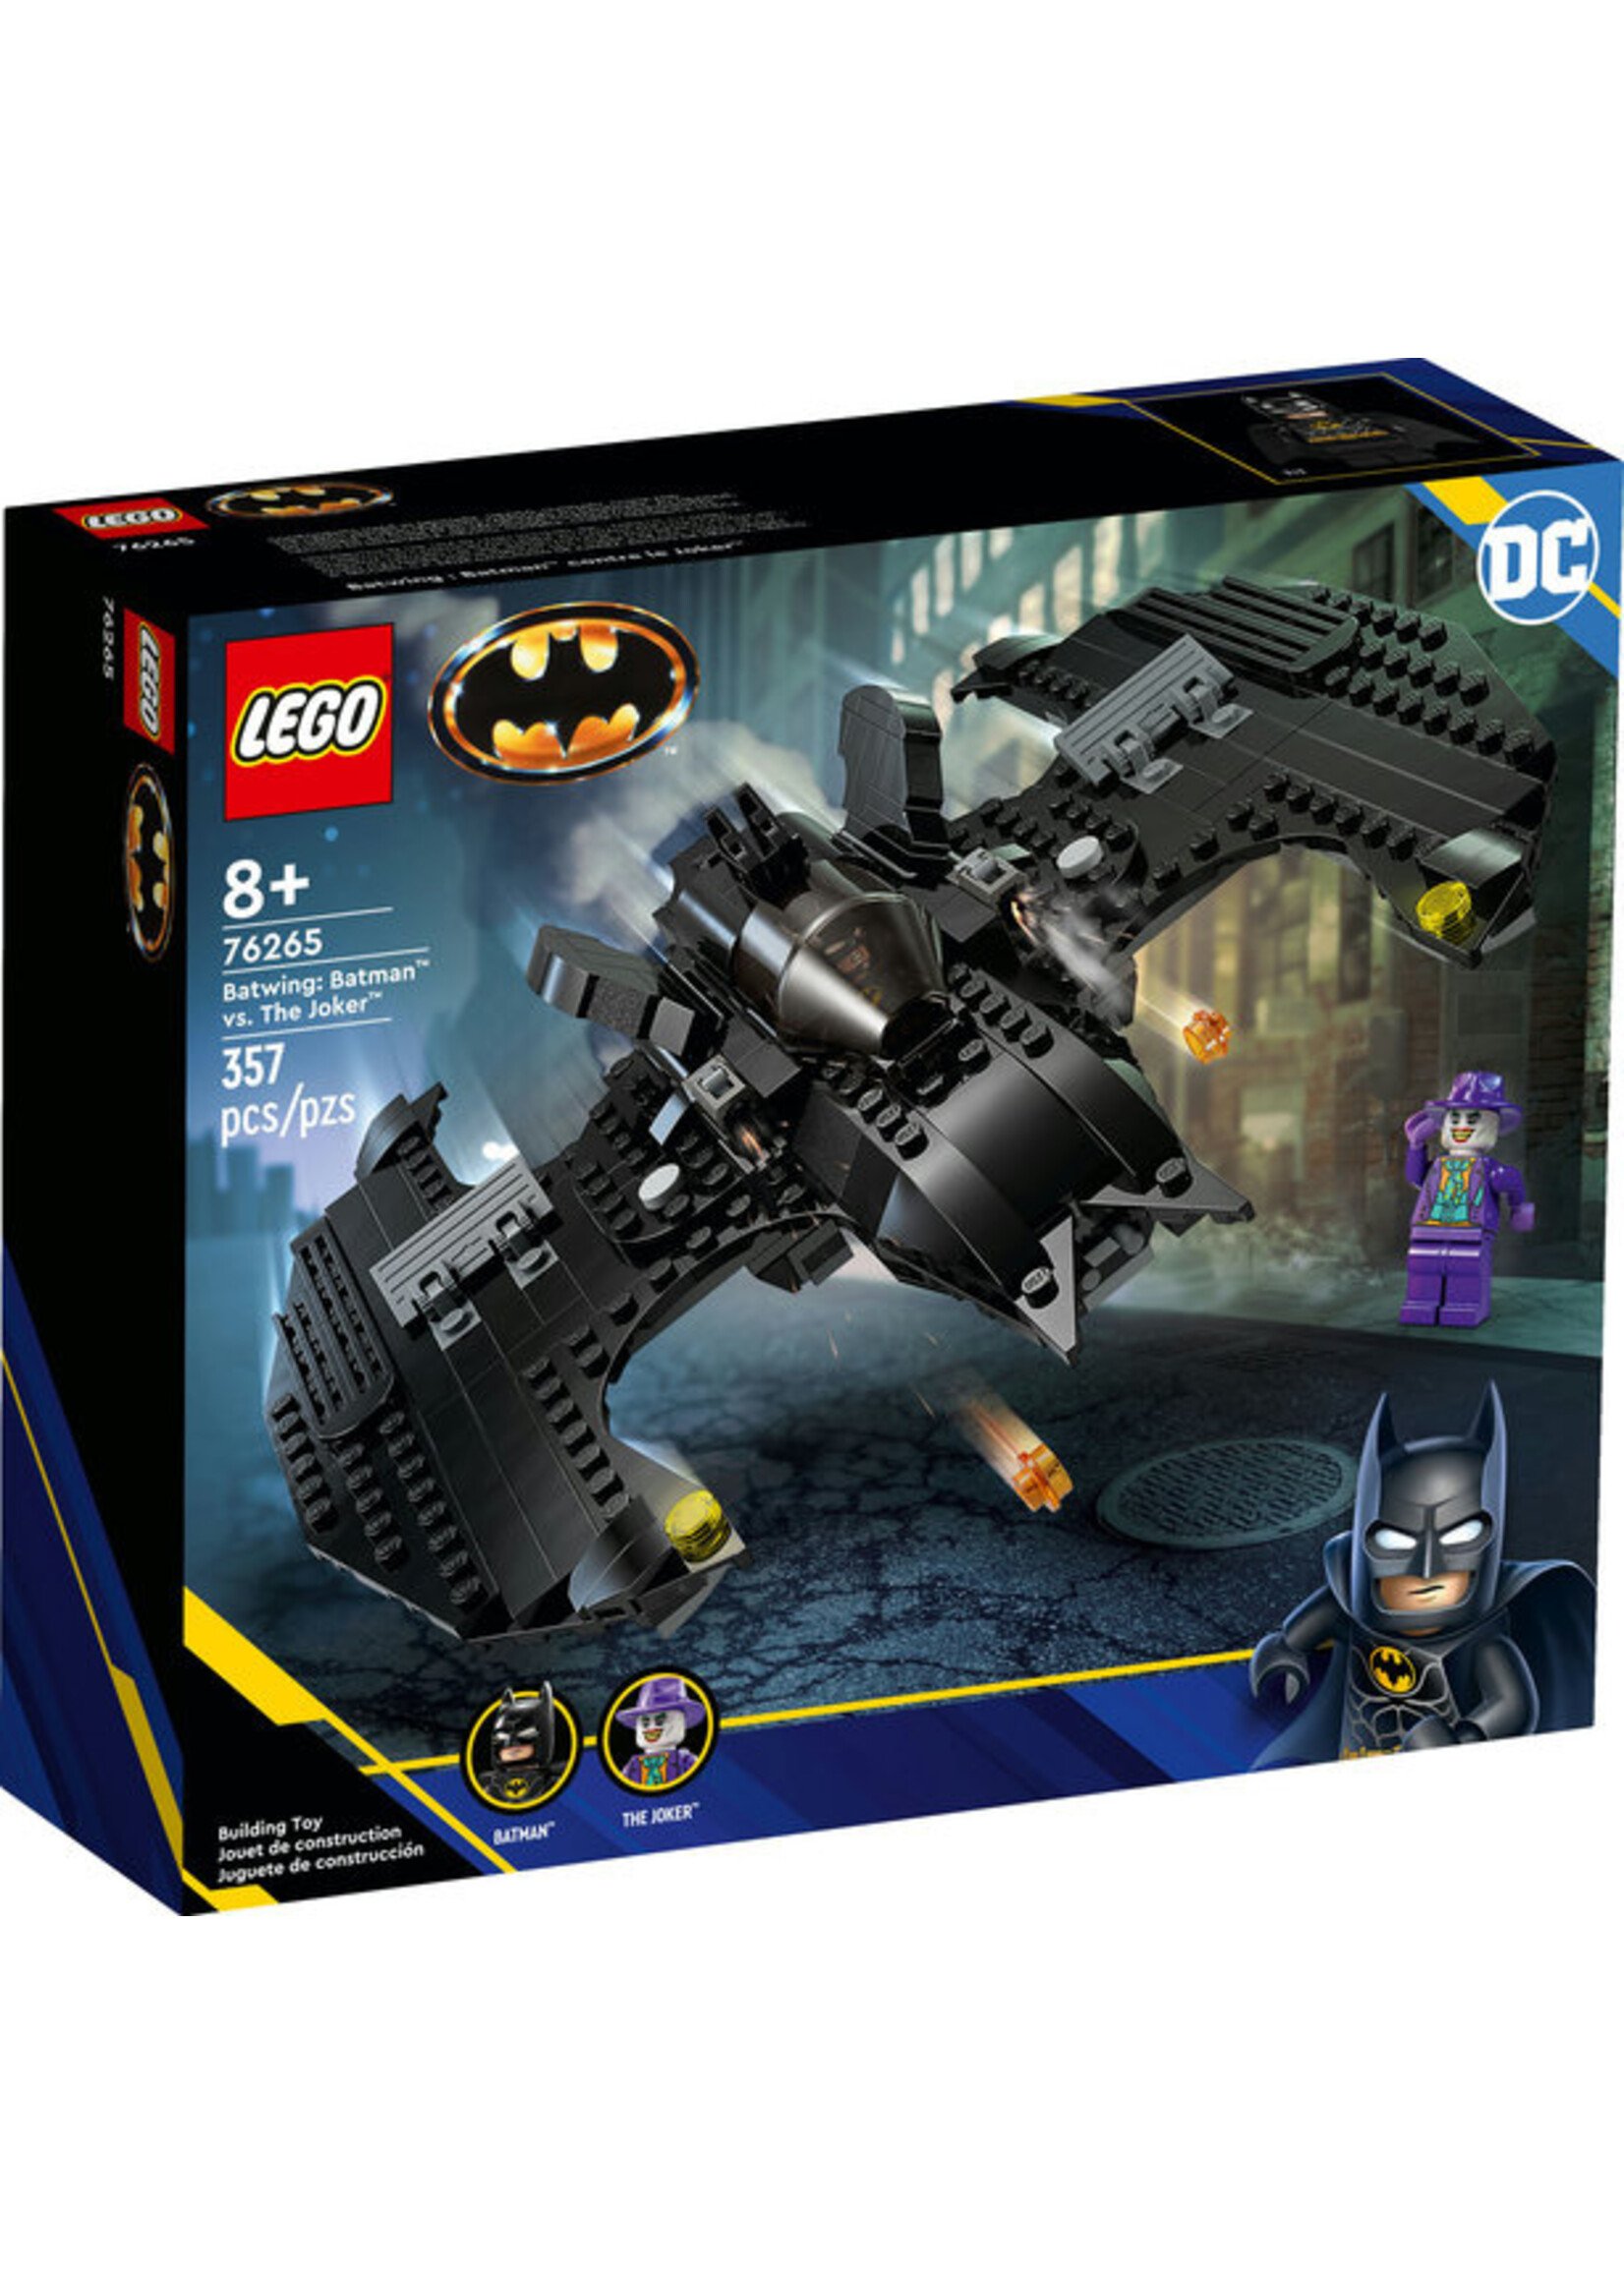 LEGO 76265 - Batwing: Batman vs The Joker